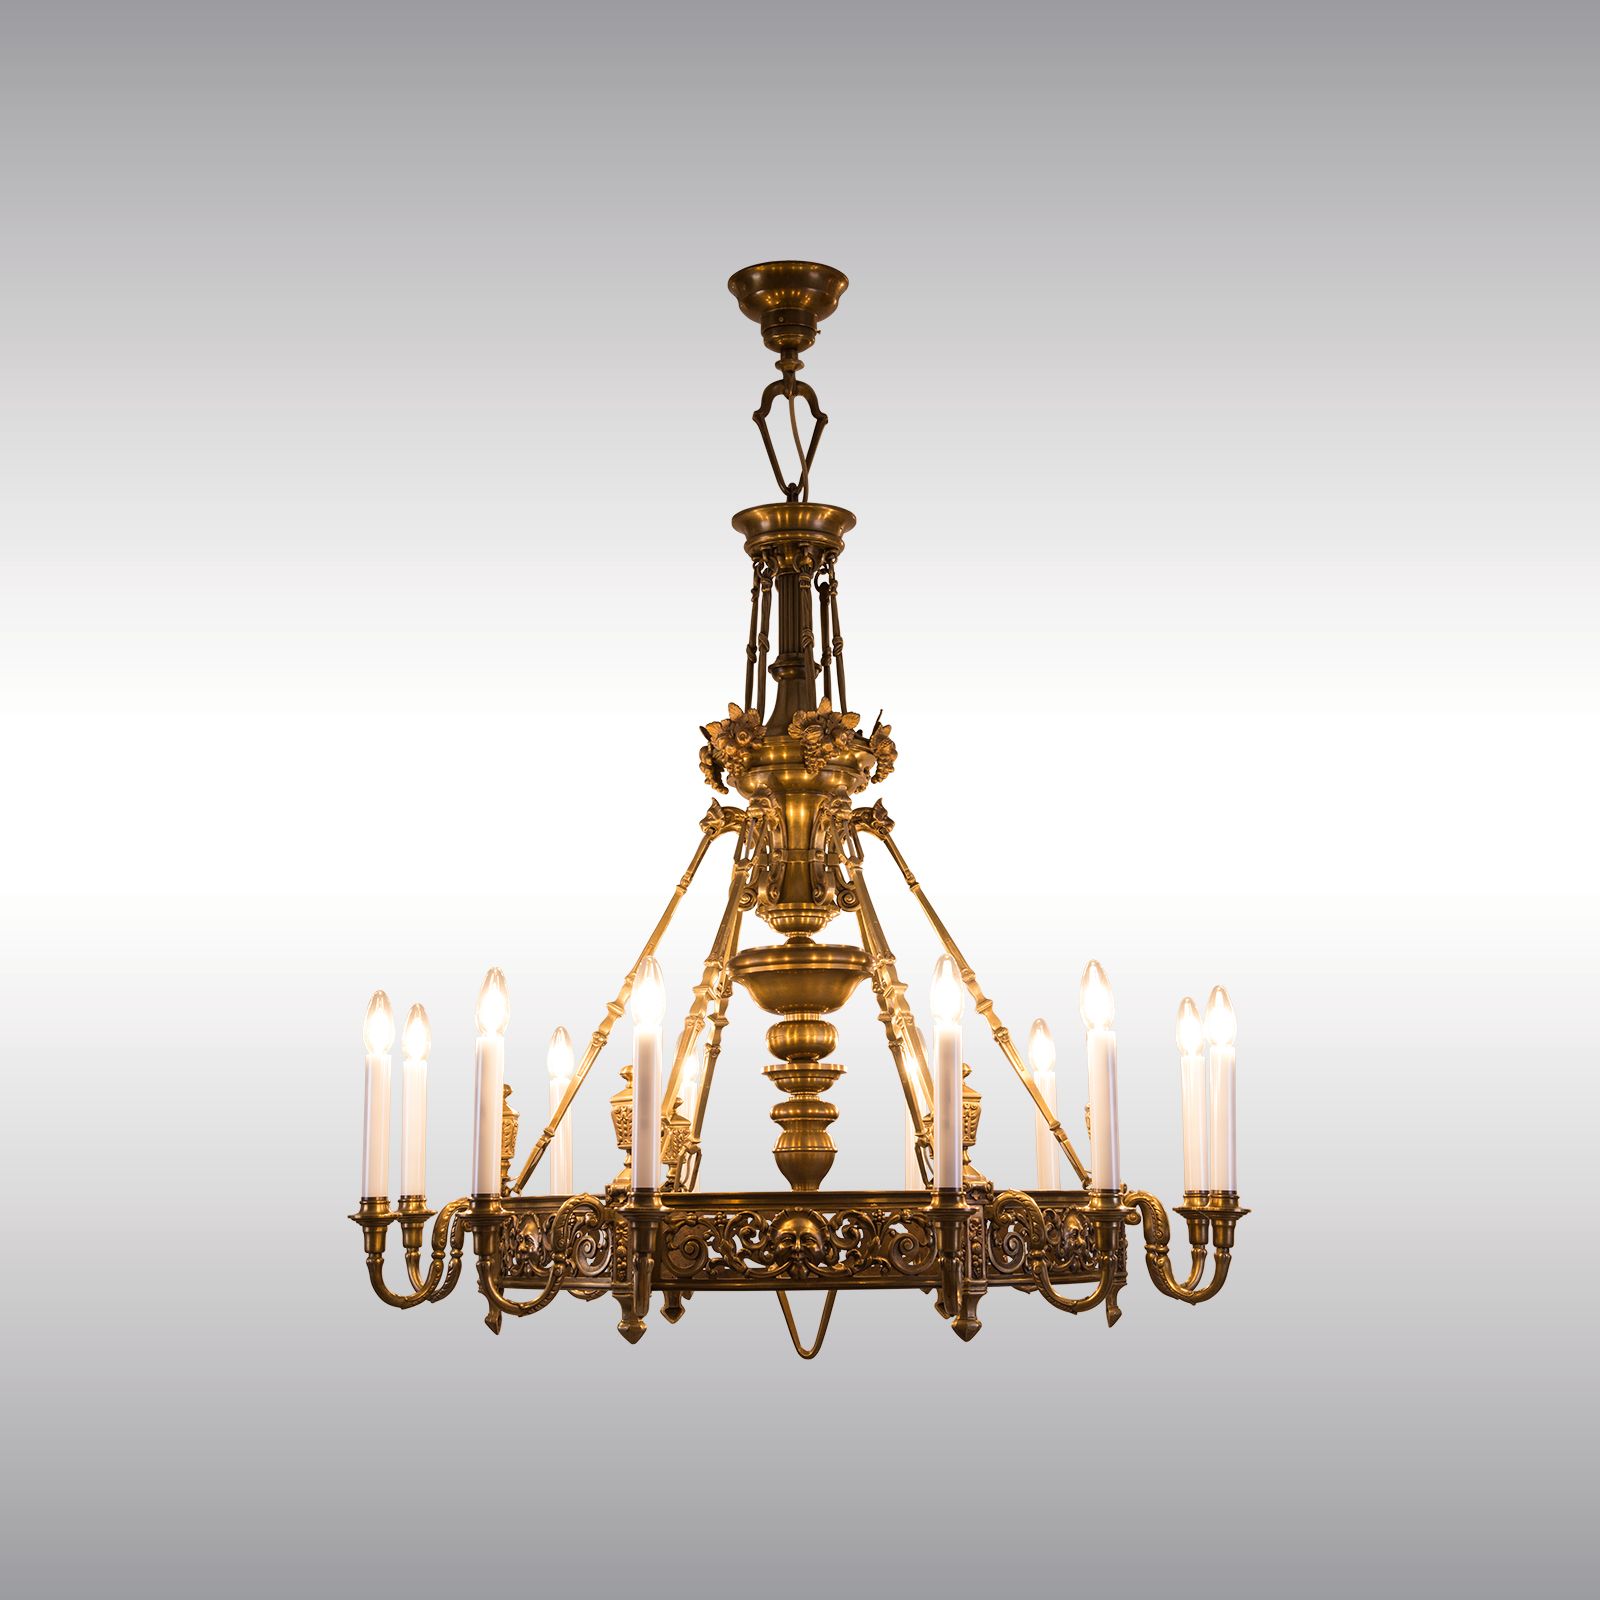 WOKA LAMPS VIENNA - OrderNr.: 80092|Historistic Chandelier - Design: Austrian Mastercraft